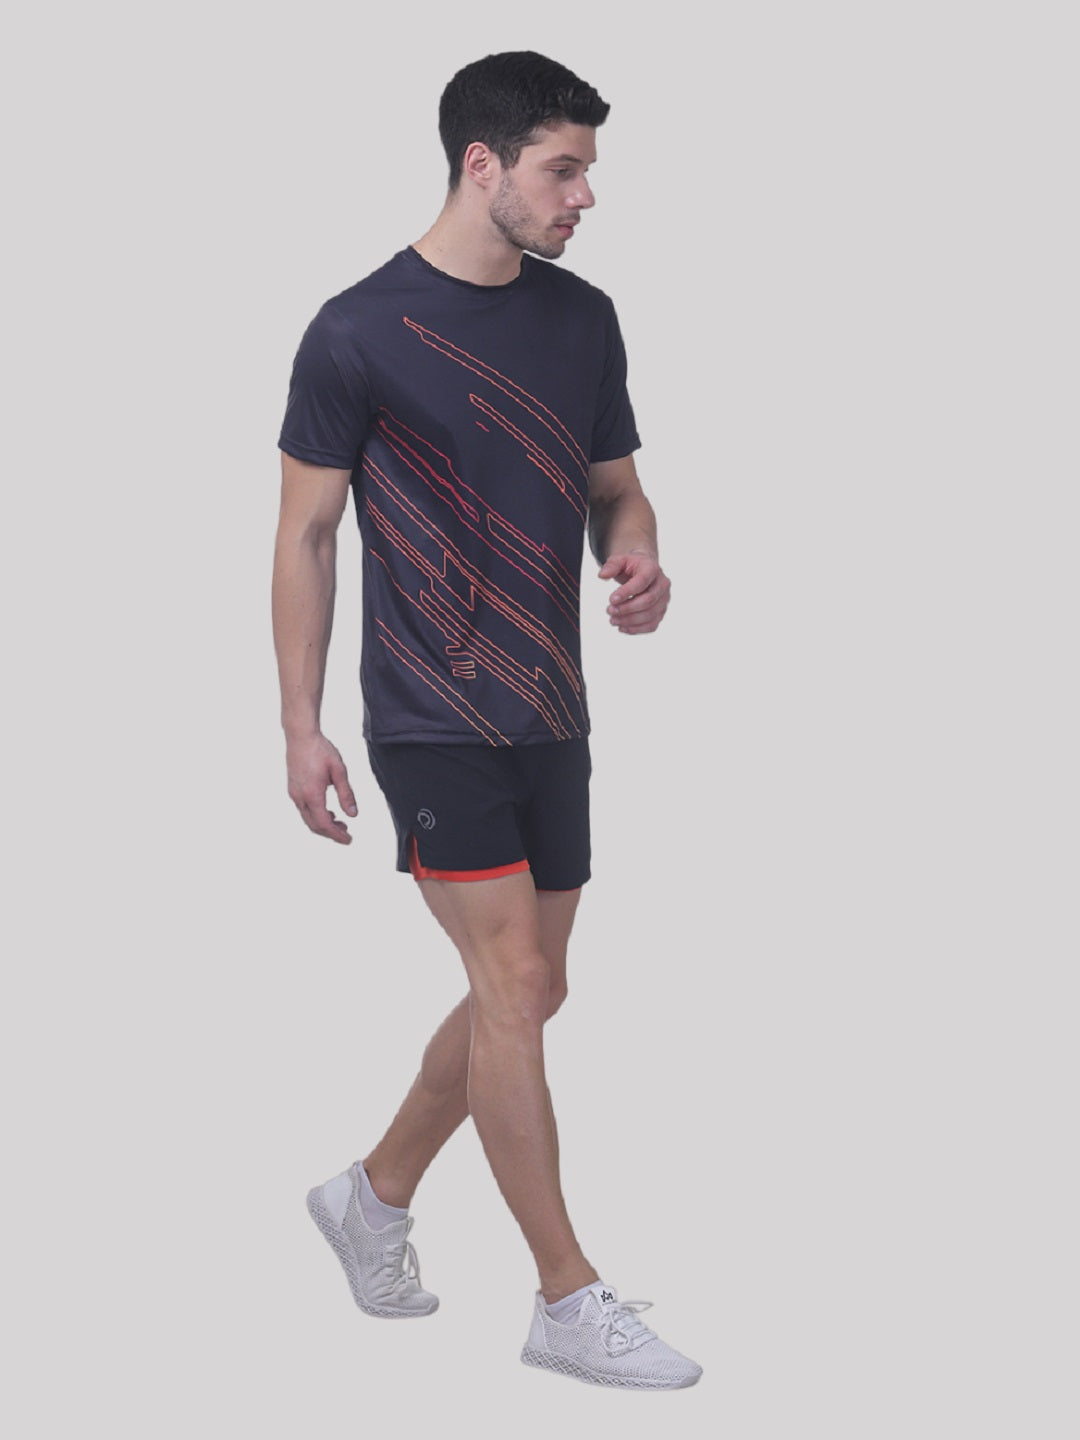 Men's Reflective Dryfit Tshirt With Flow Graphics